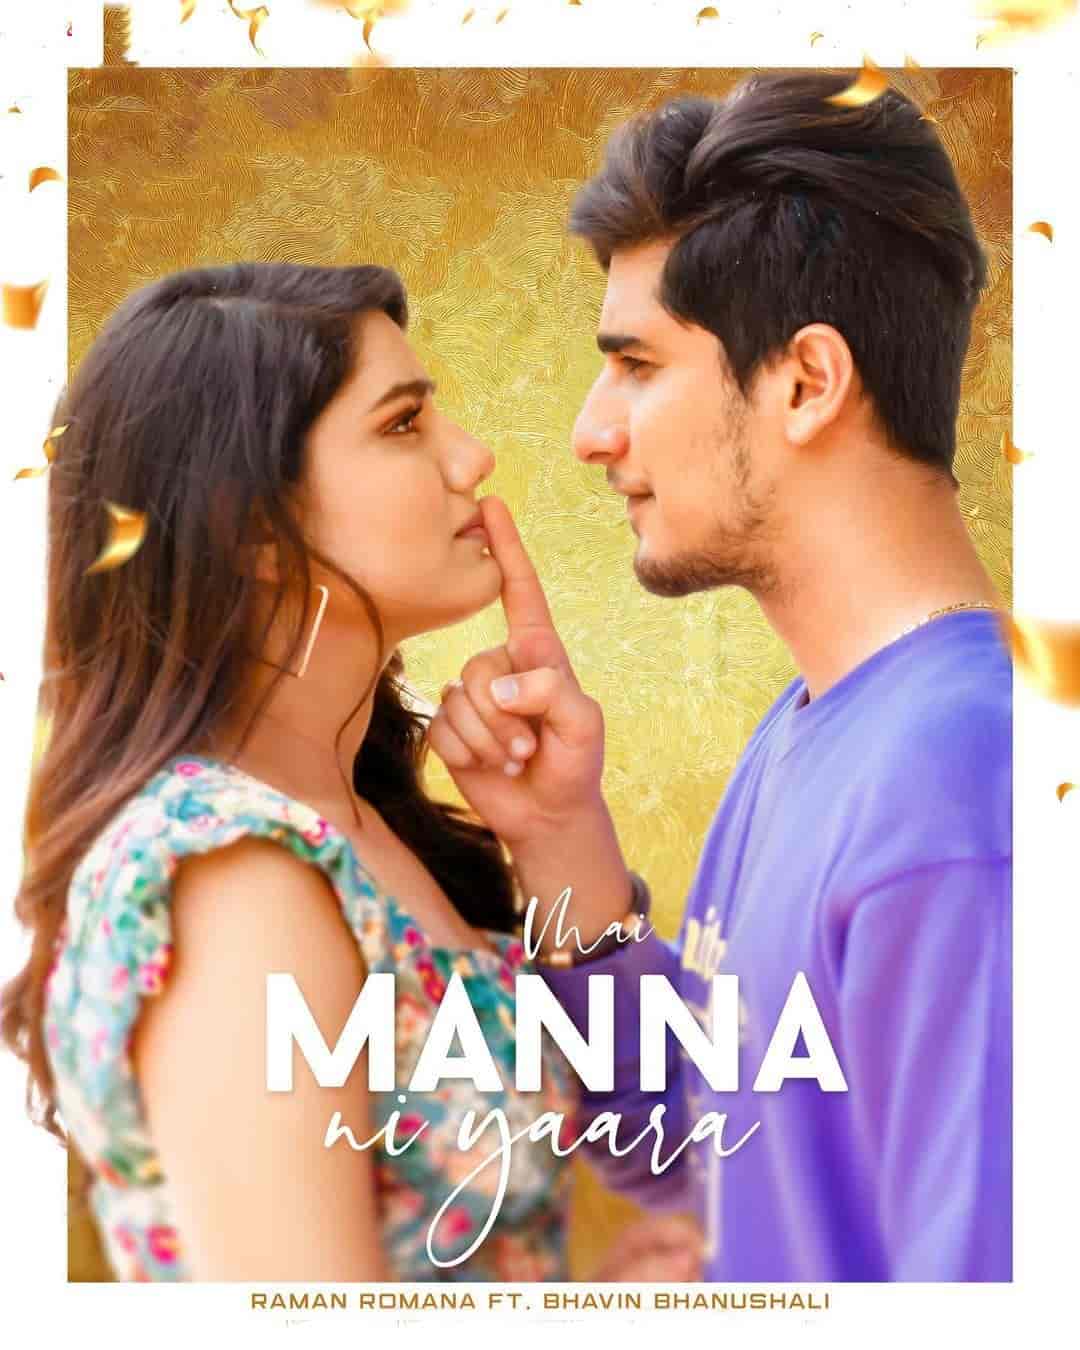 Main Manna Ni Yaara Punjabi Song Image Features Raman Romana and Bhavin Bhanushali